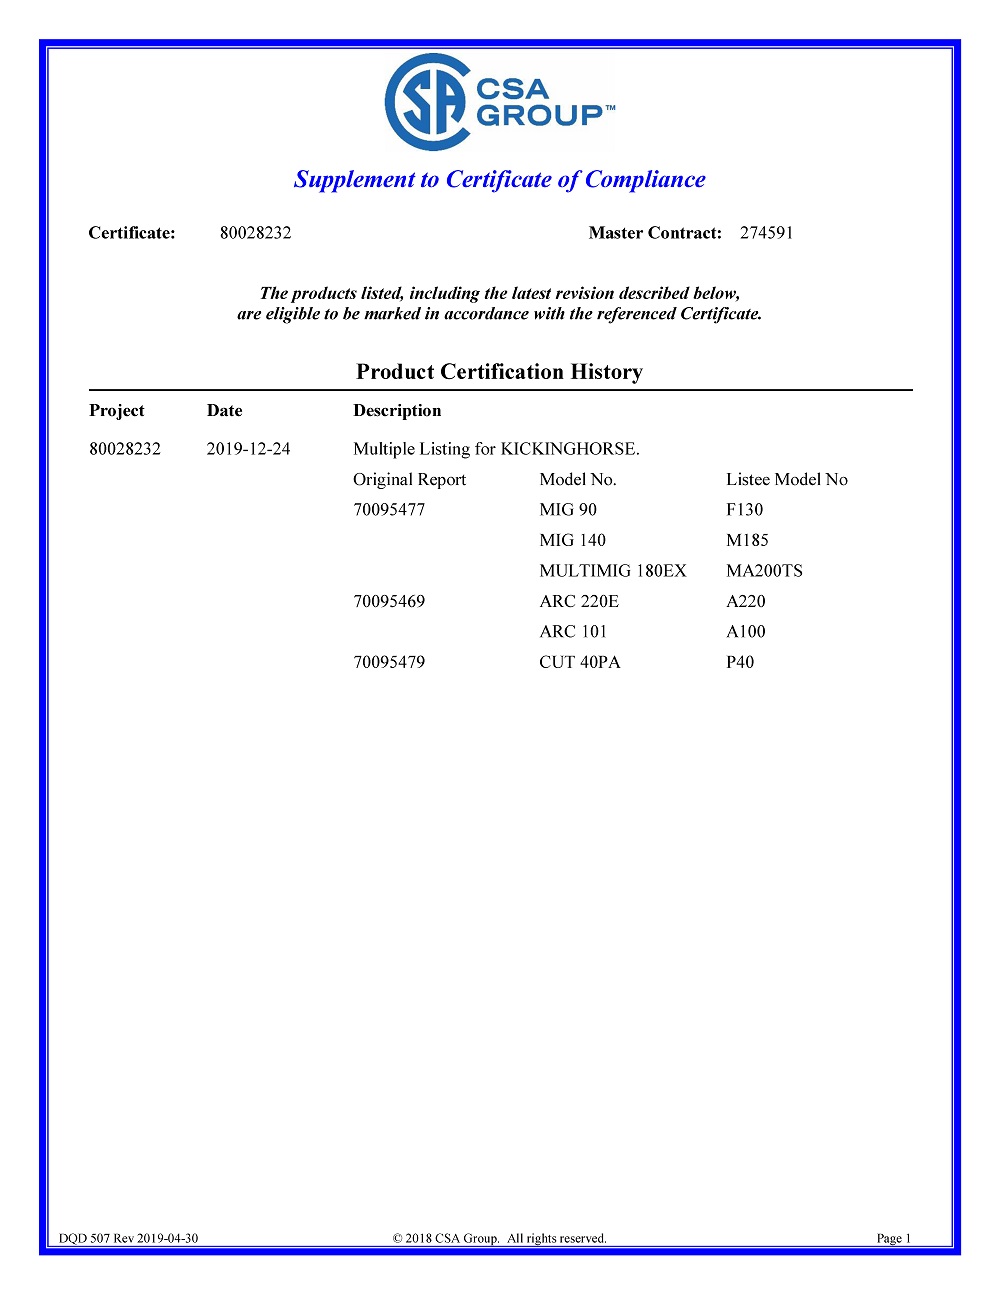 KickingHorse CSA certification